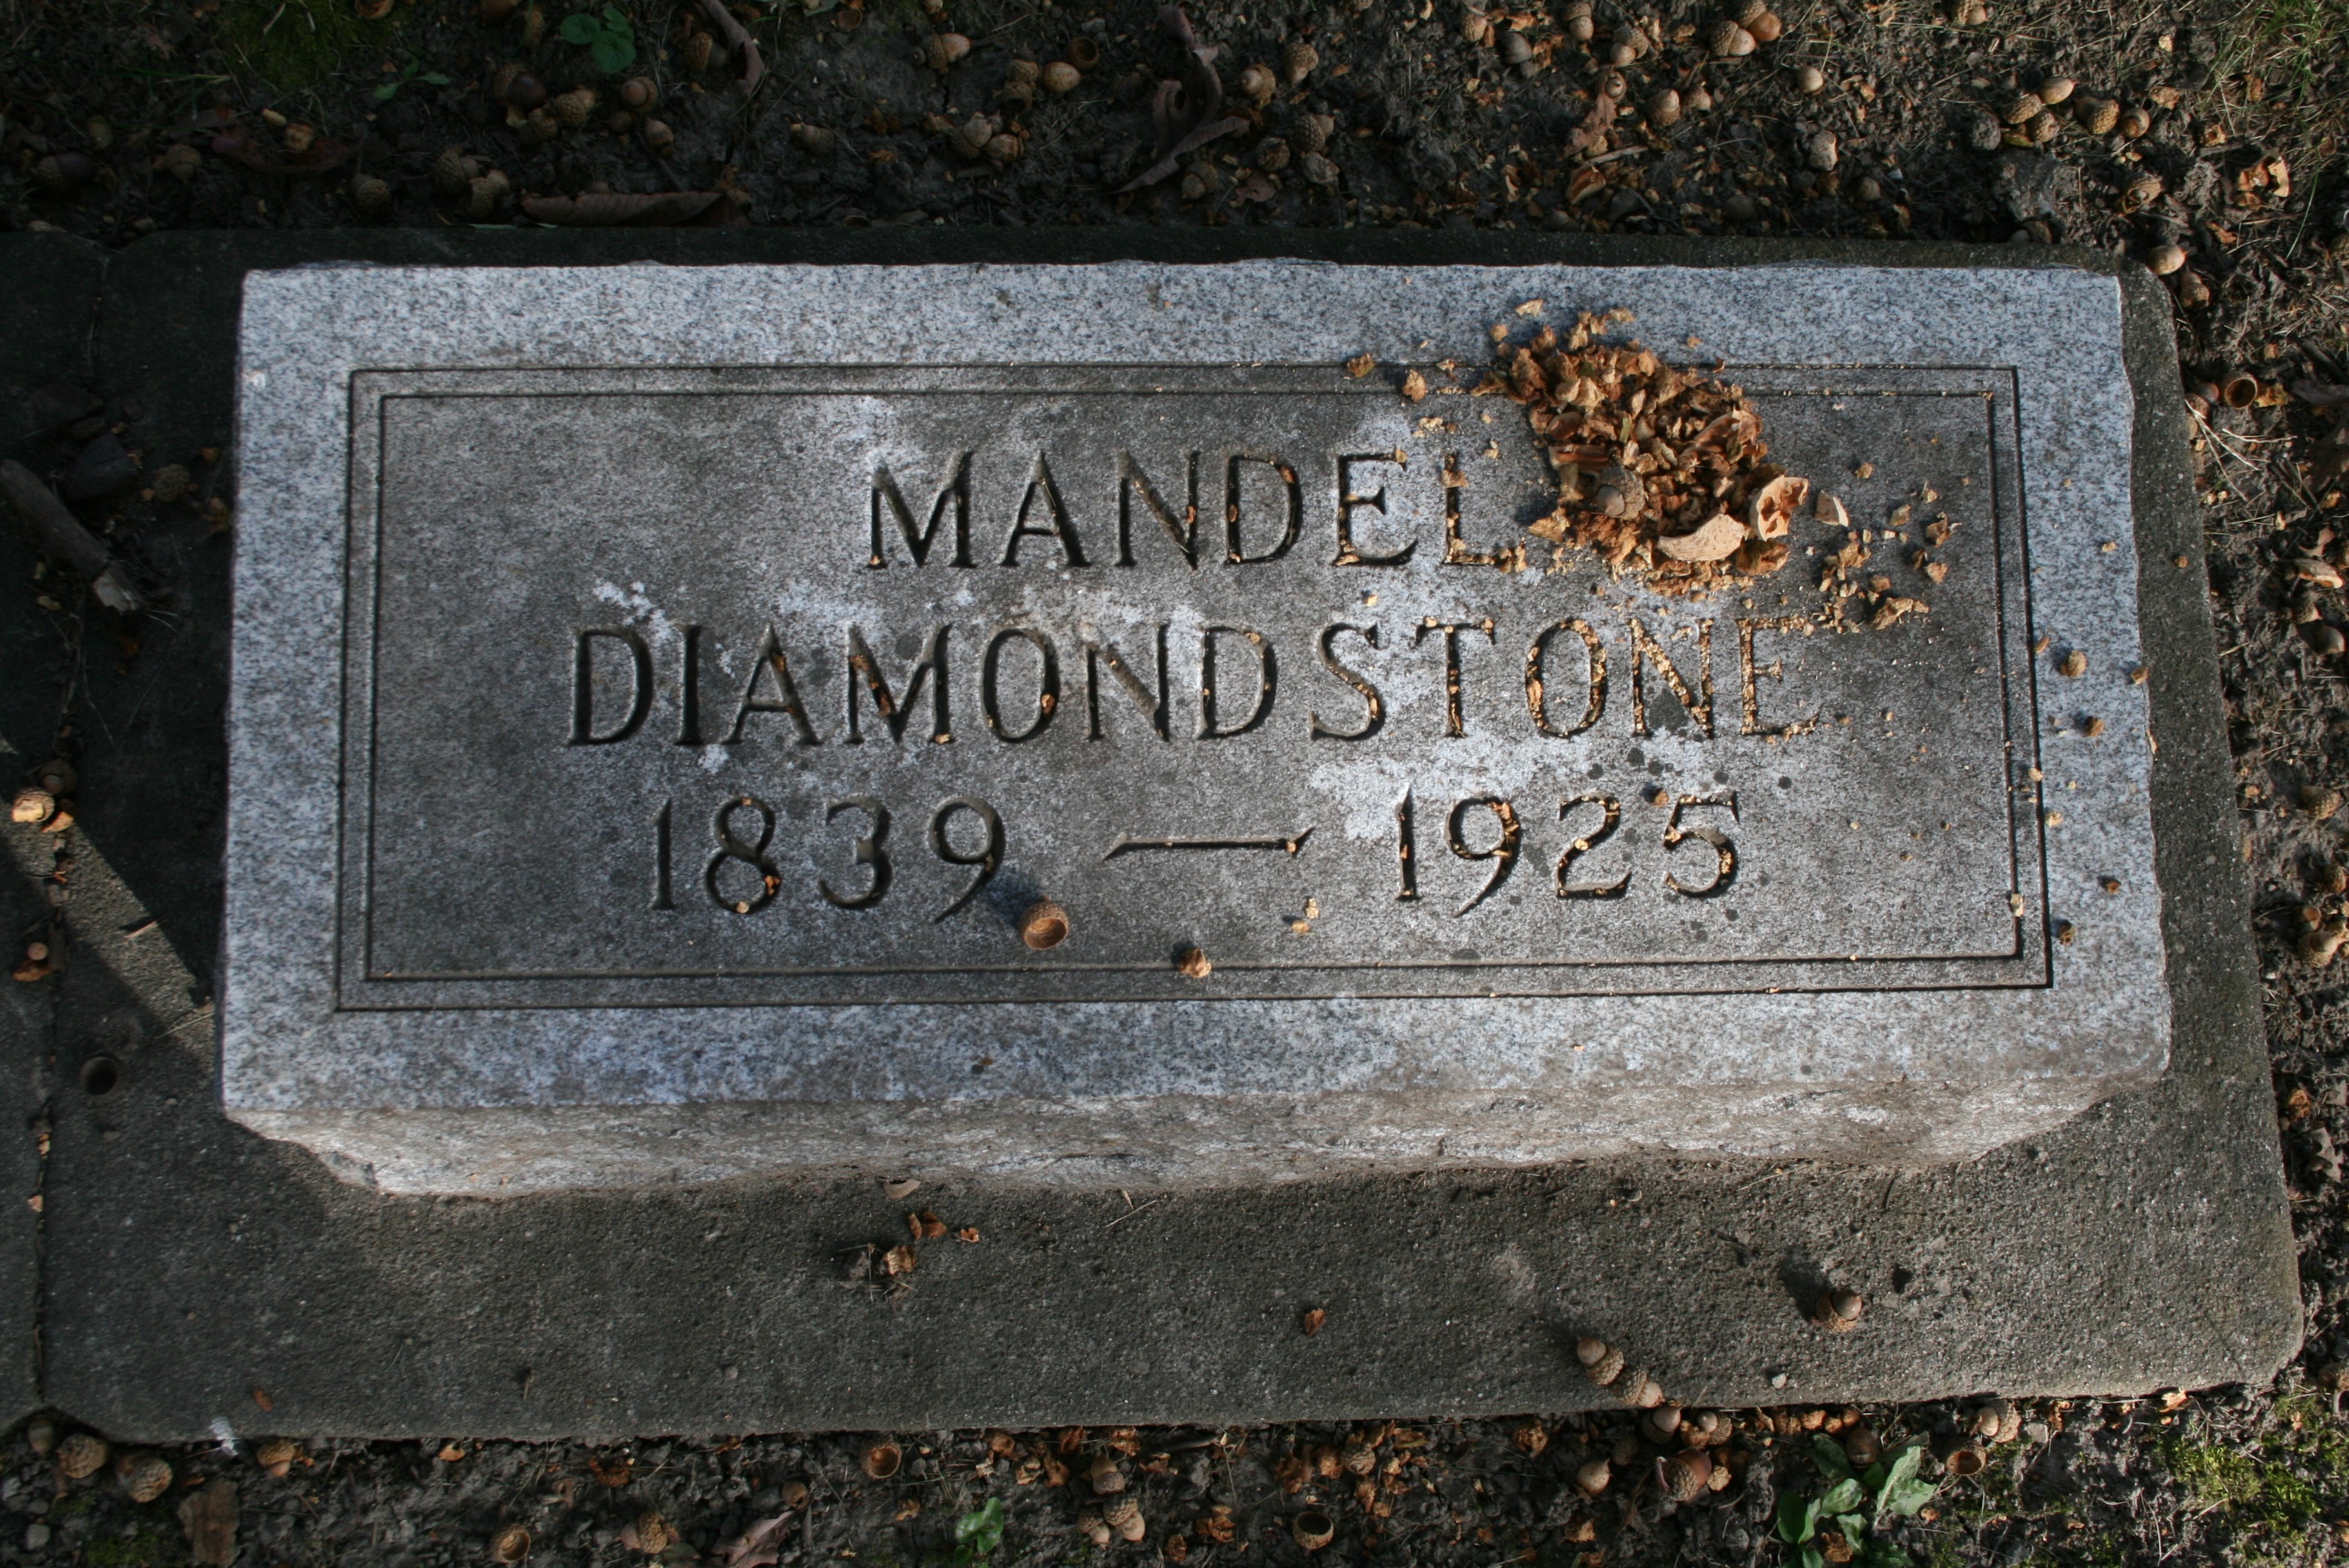 Diamondstone, Mandel